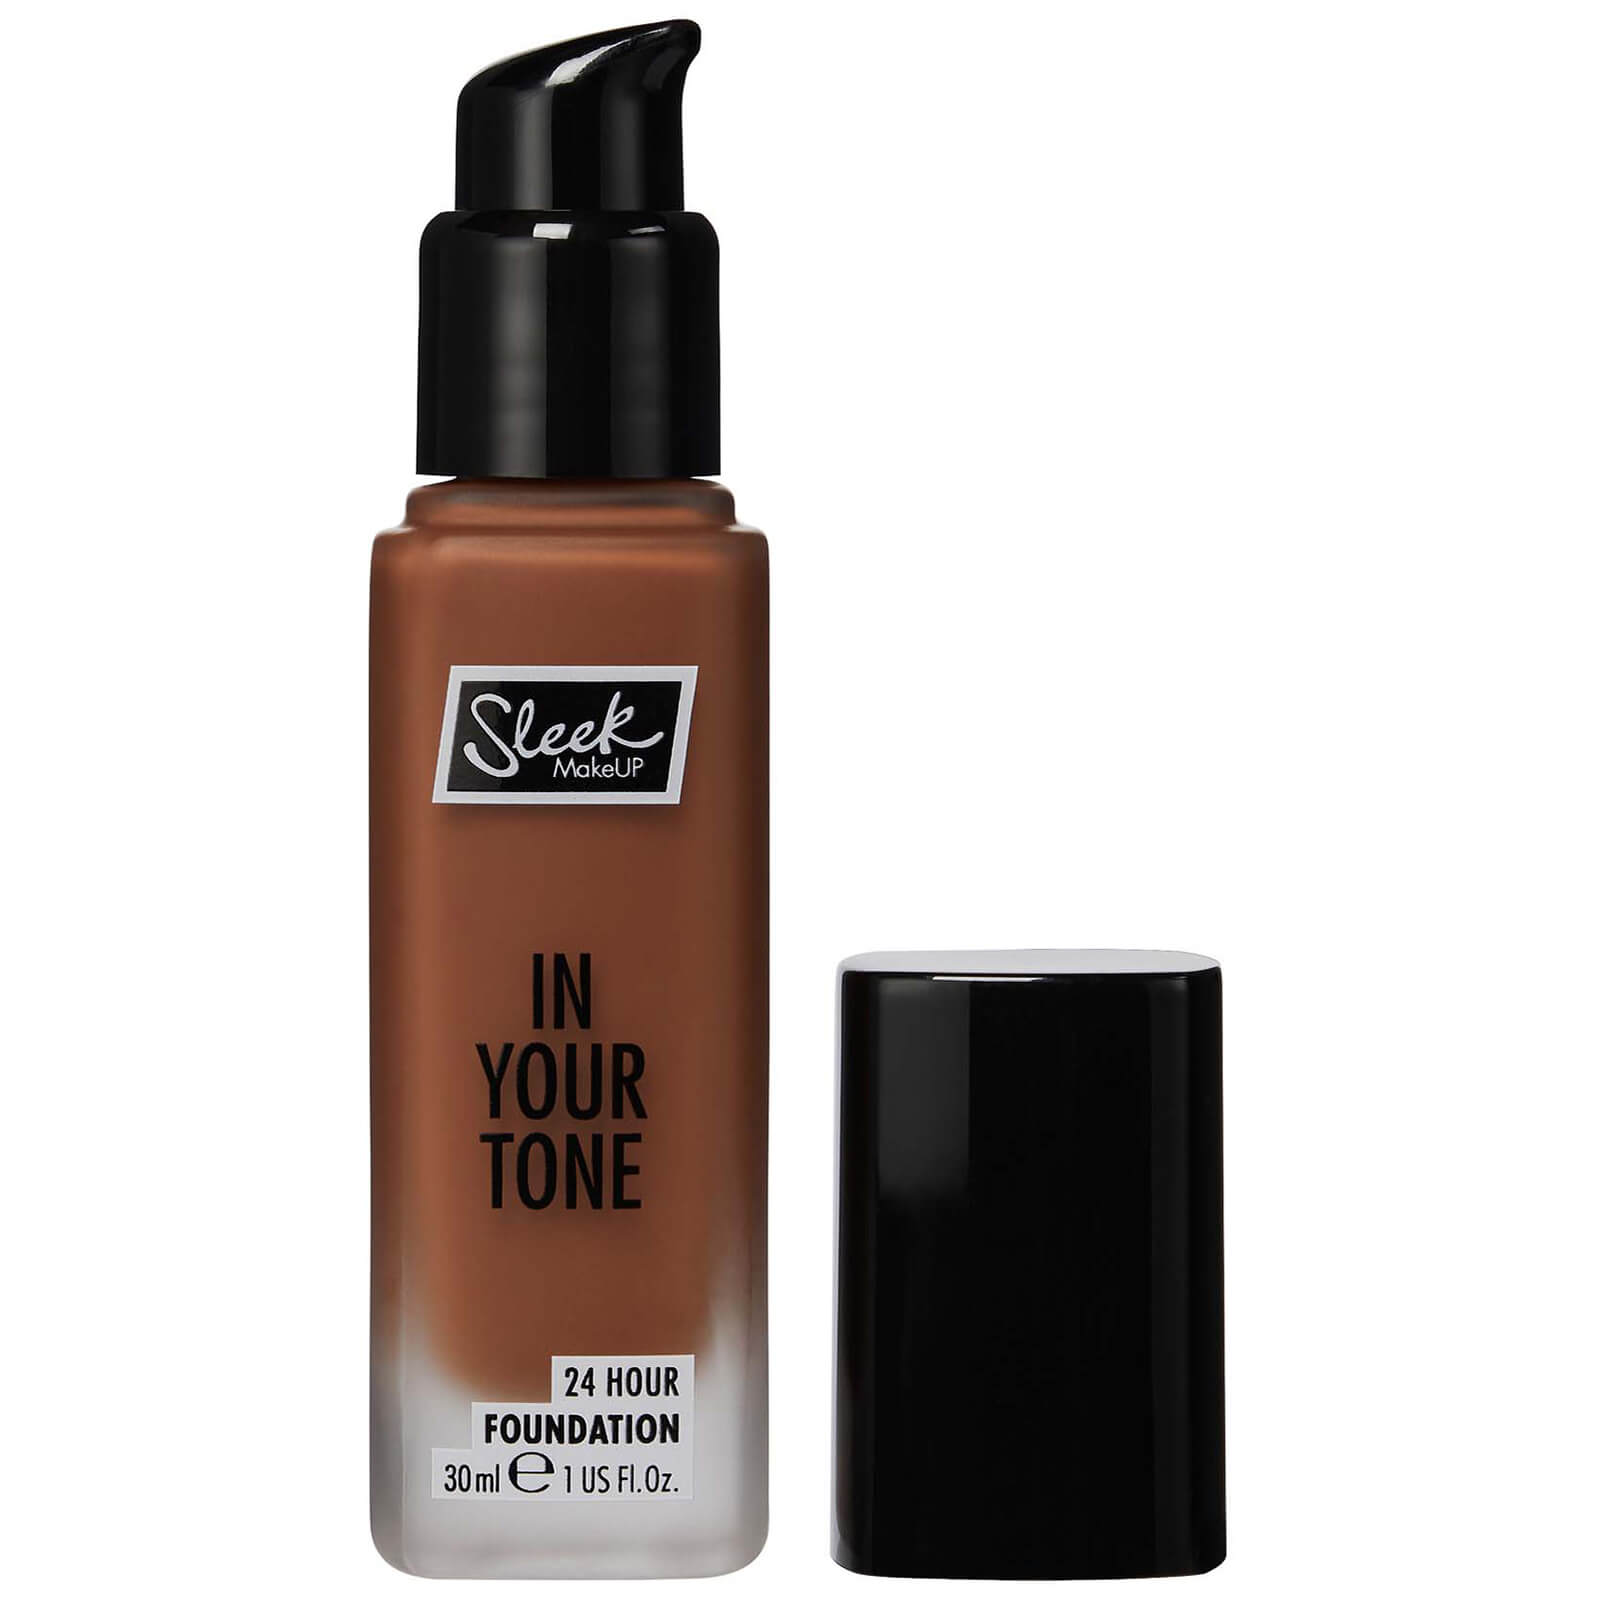 Sleek MakeUP in Your Tone 24 Hour Foundation 30ml (Various Shades) - 11N von Sleek MakeUP